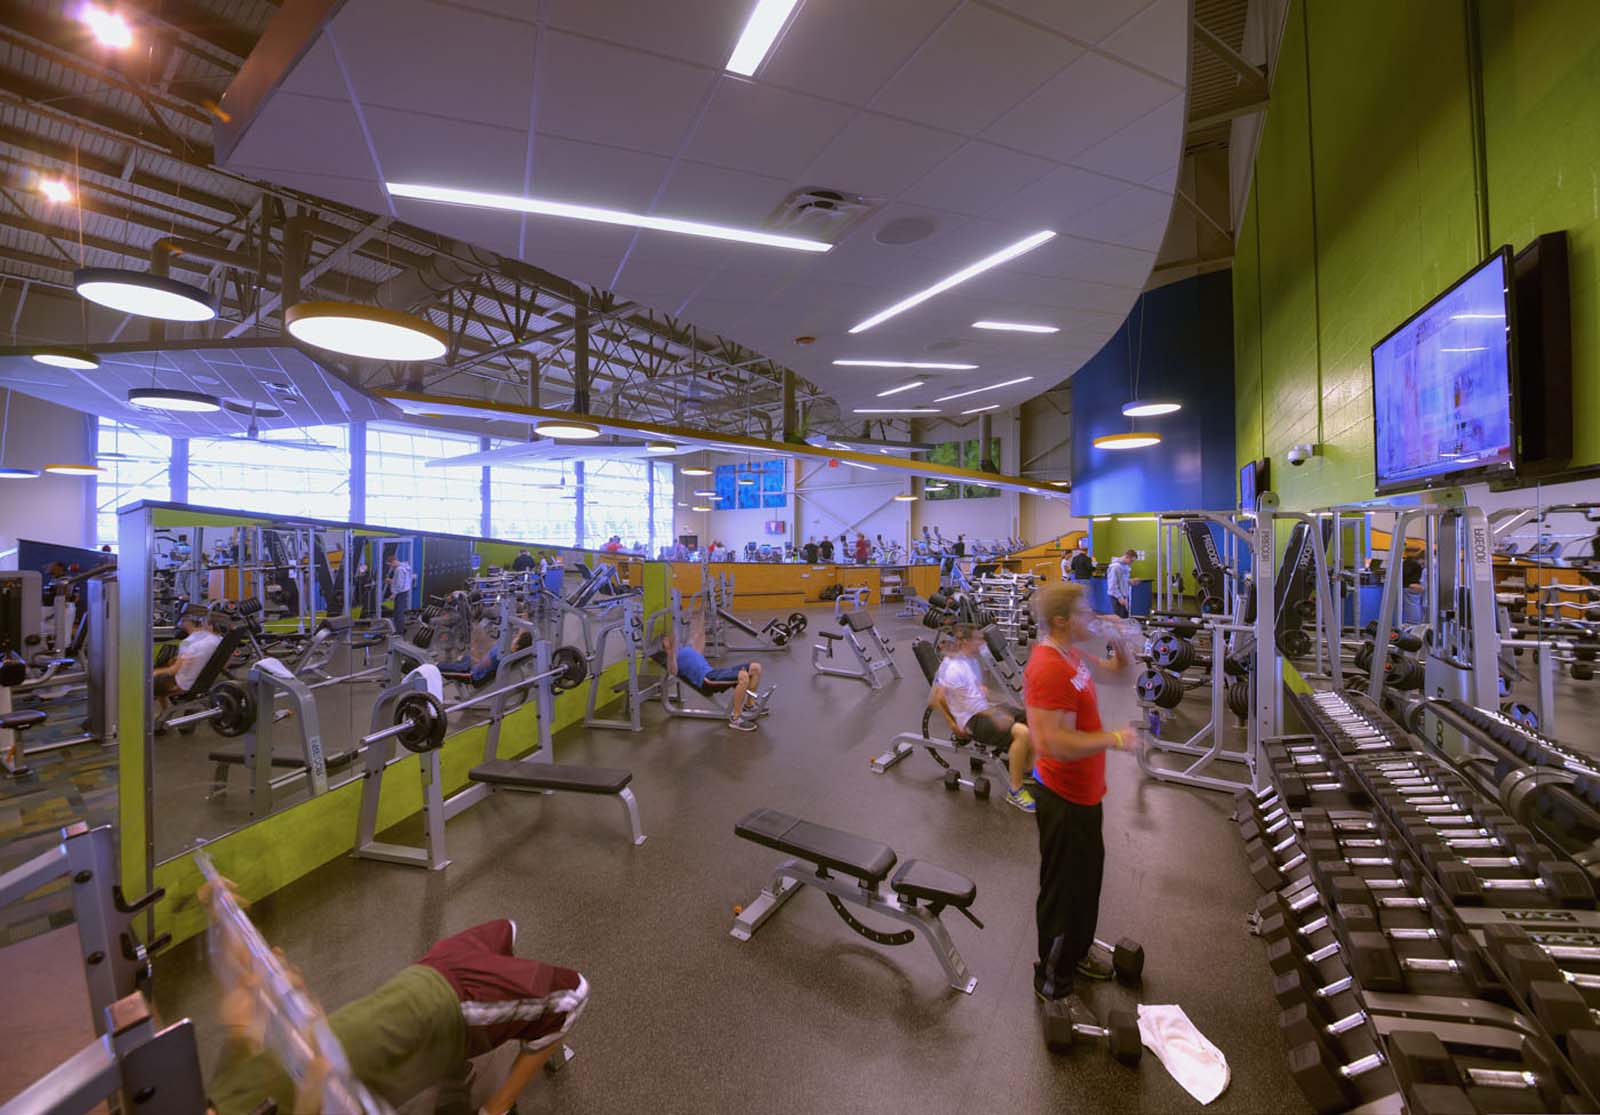 PE Fitness center interior